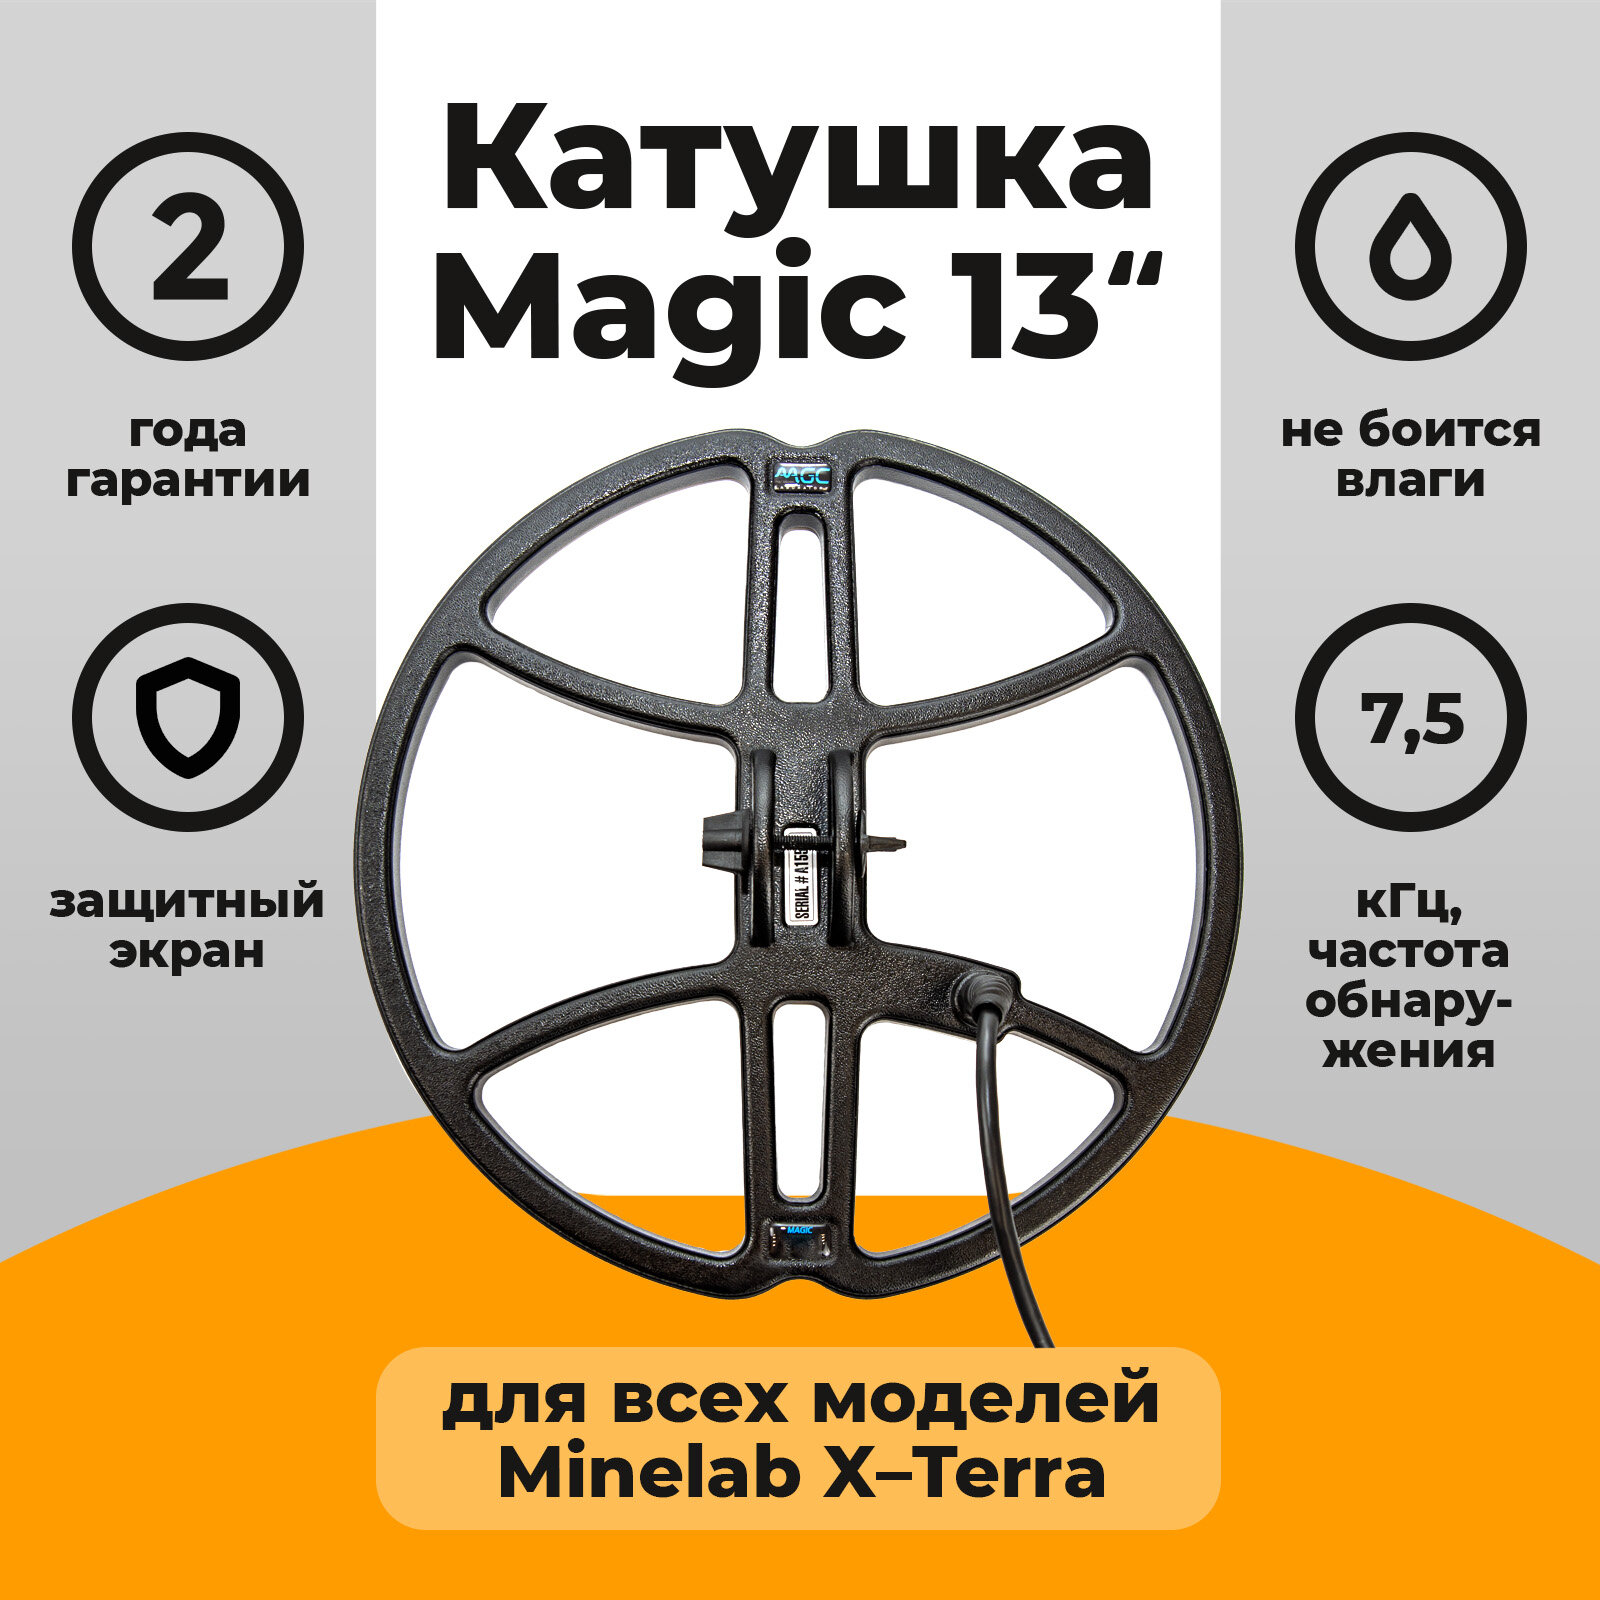 Катушка Magic 13 для X-Terra 7,5 кГц